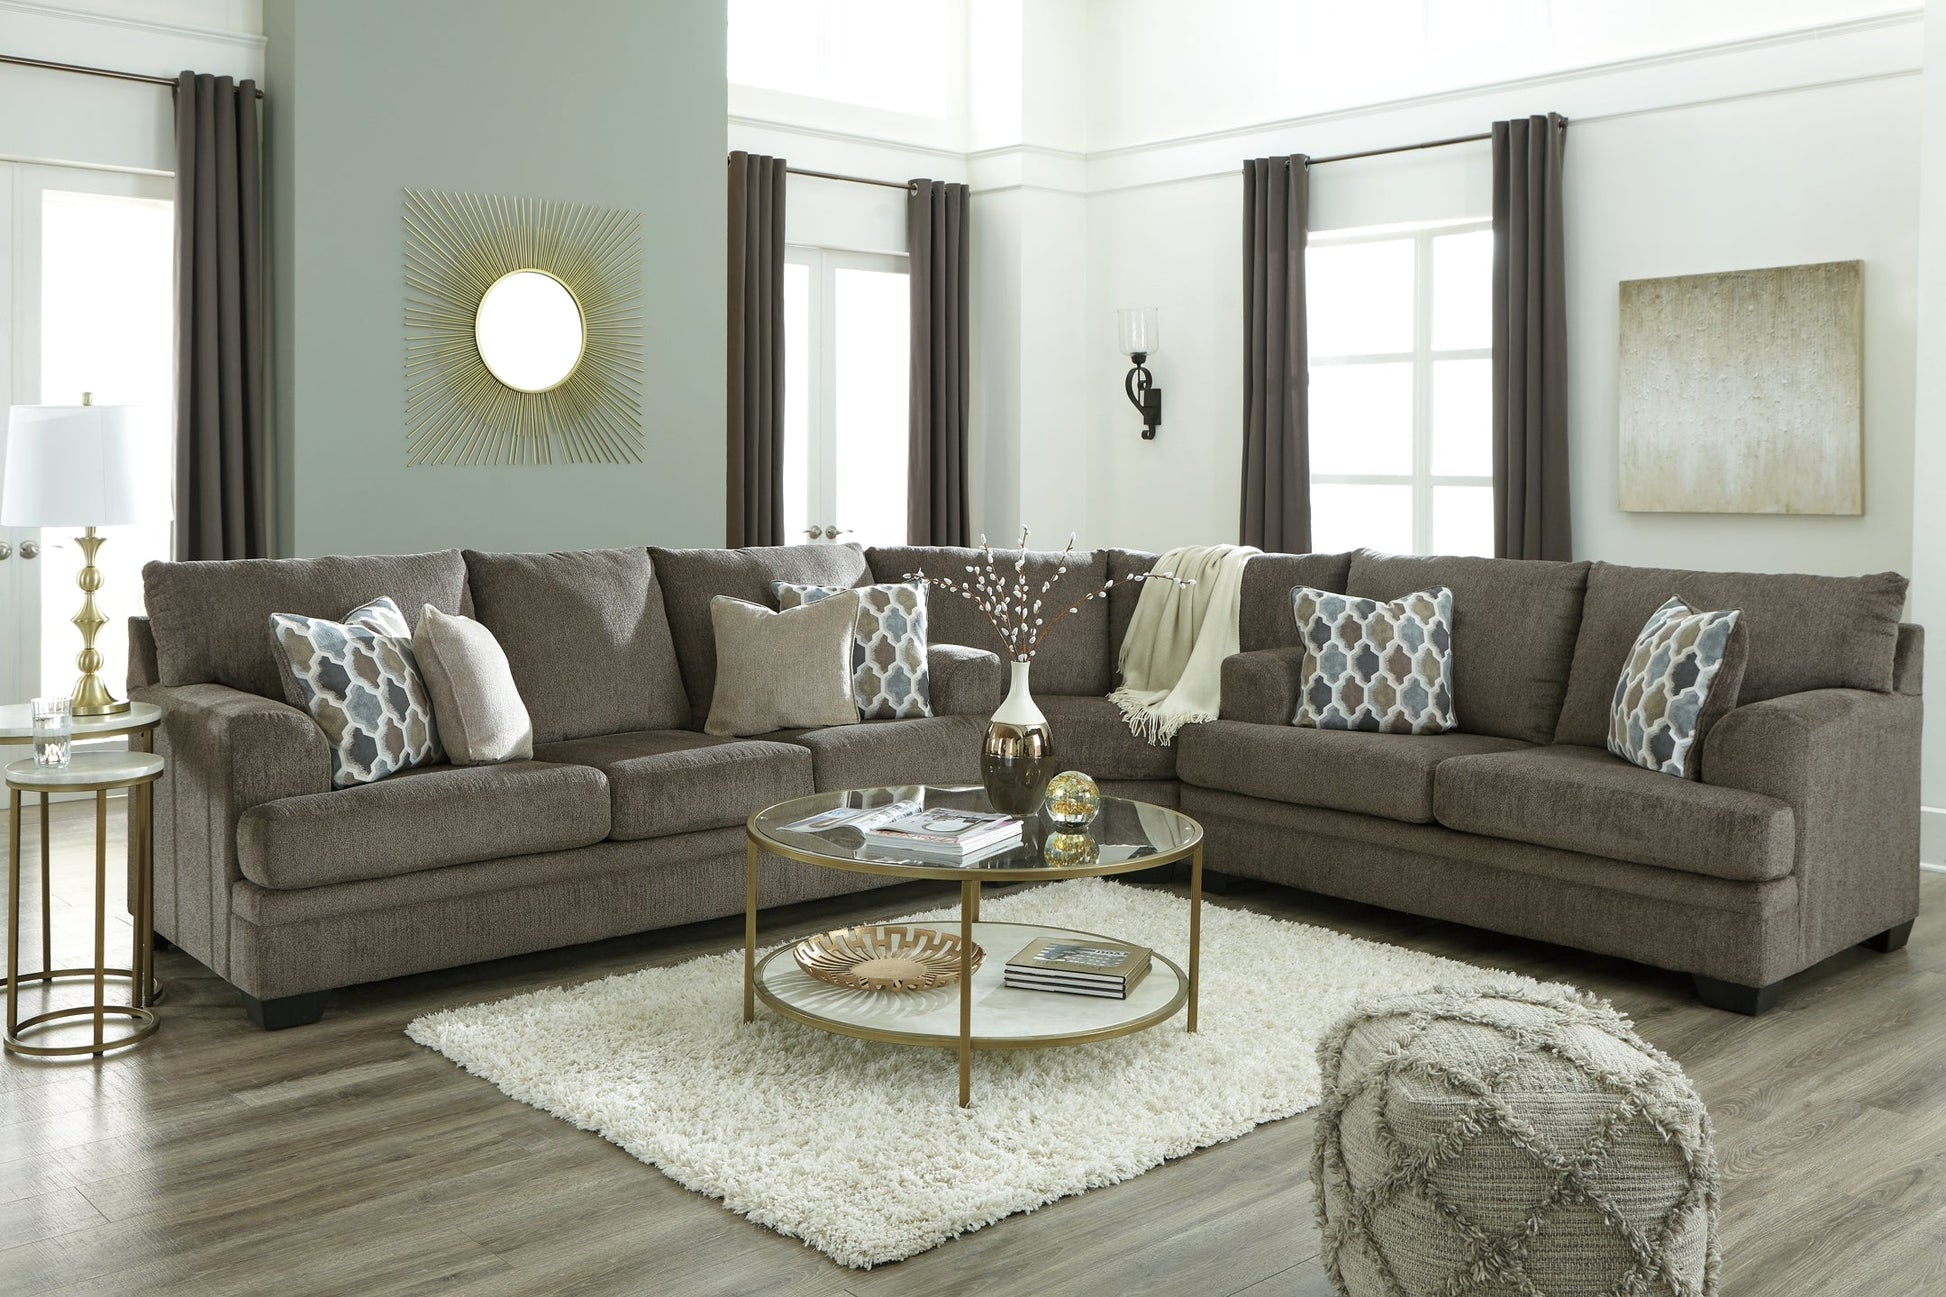 Dorsten Queen Sofa Sleeper at Cloud 9 Mattress & Furniture furniture, home furnishing, home decor